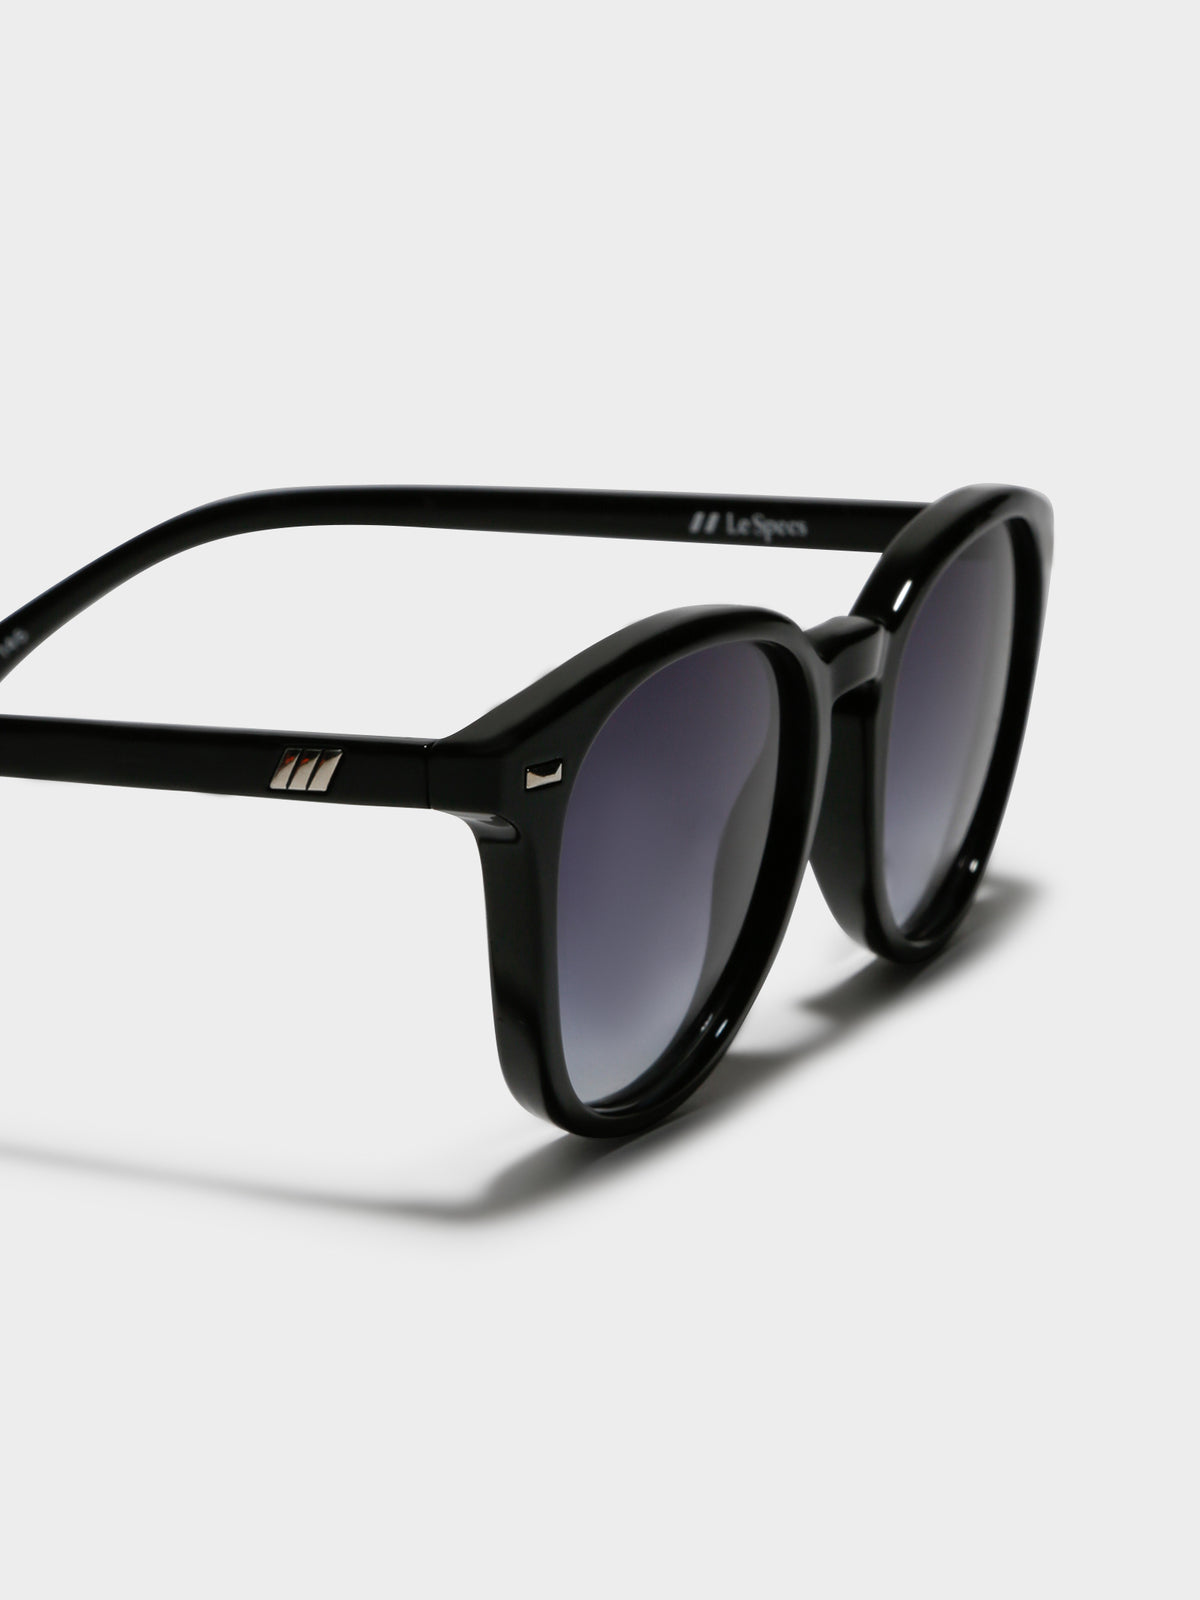 Unisex Bandwagon Sunglasses in Black